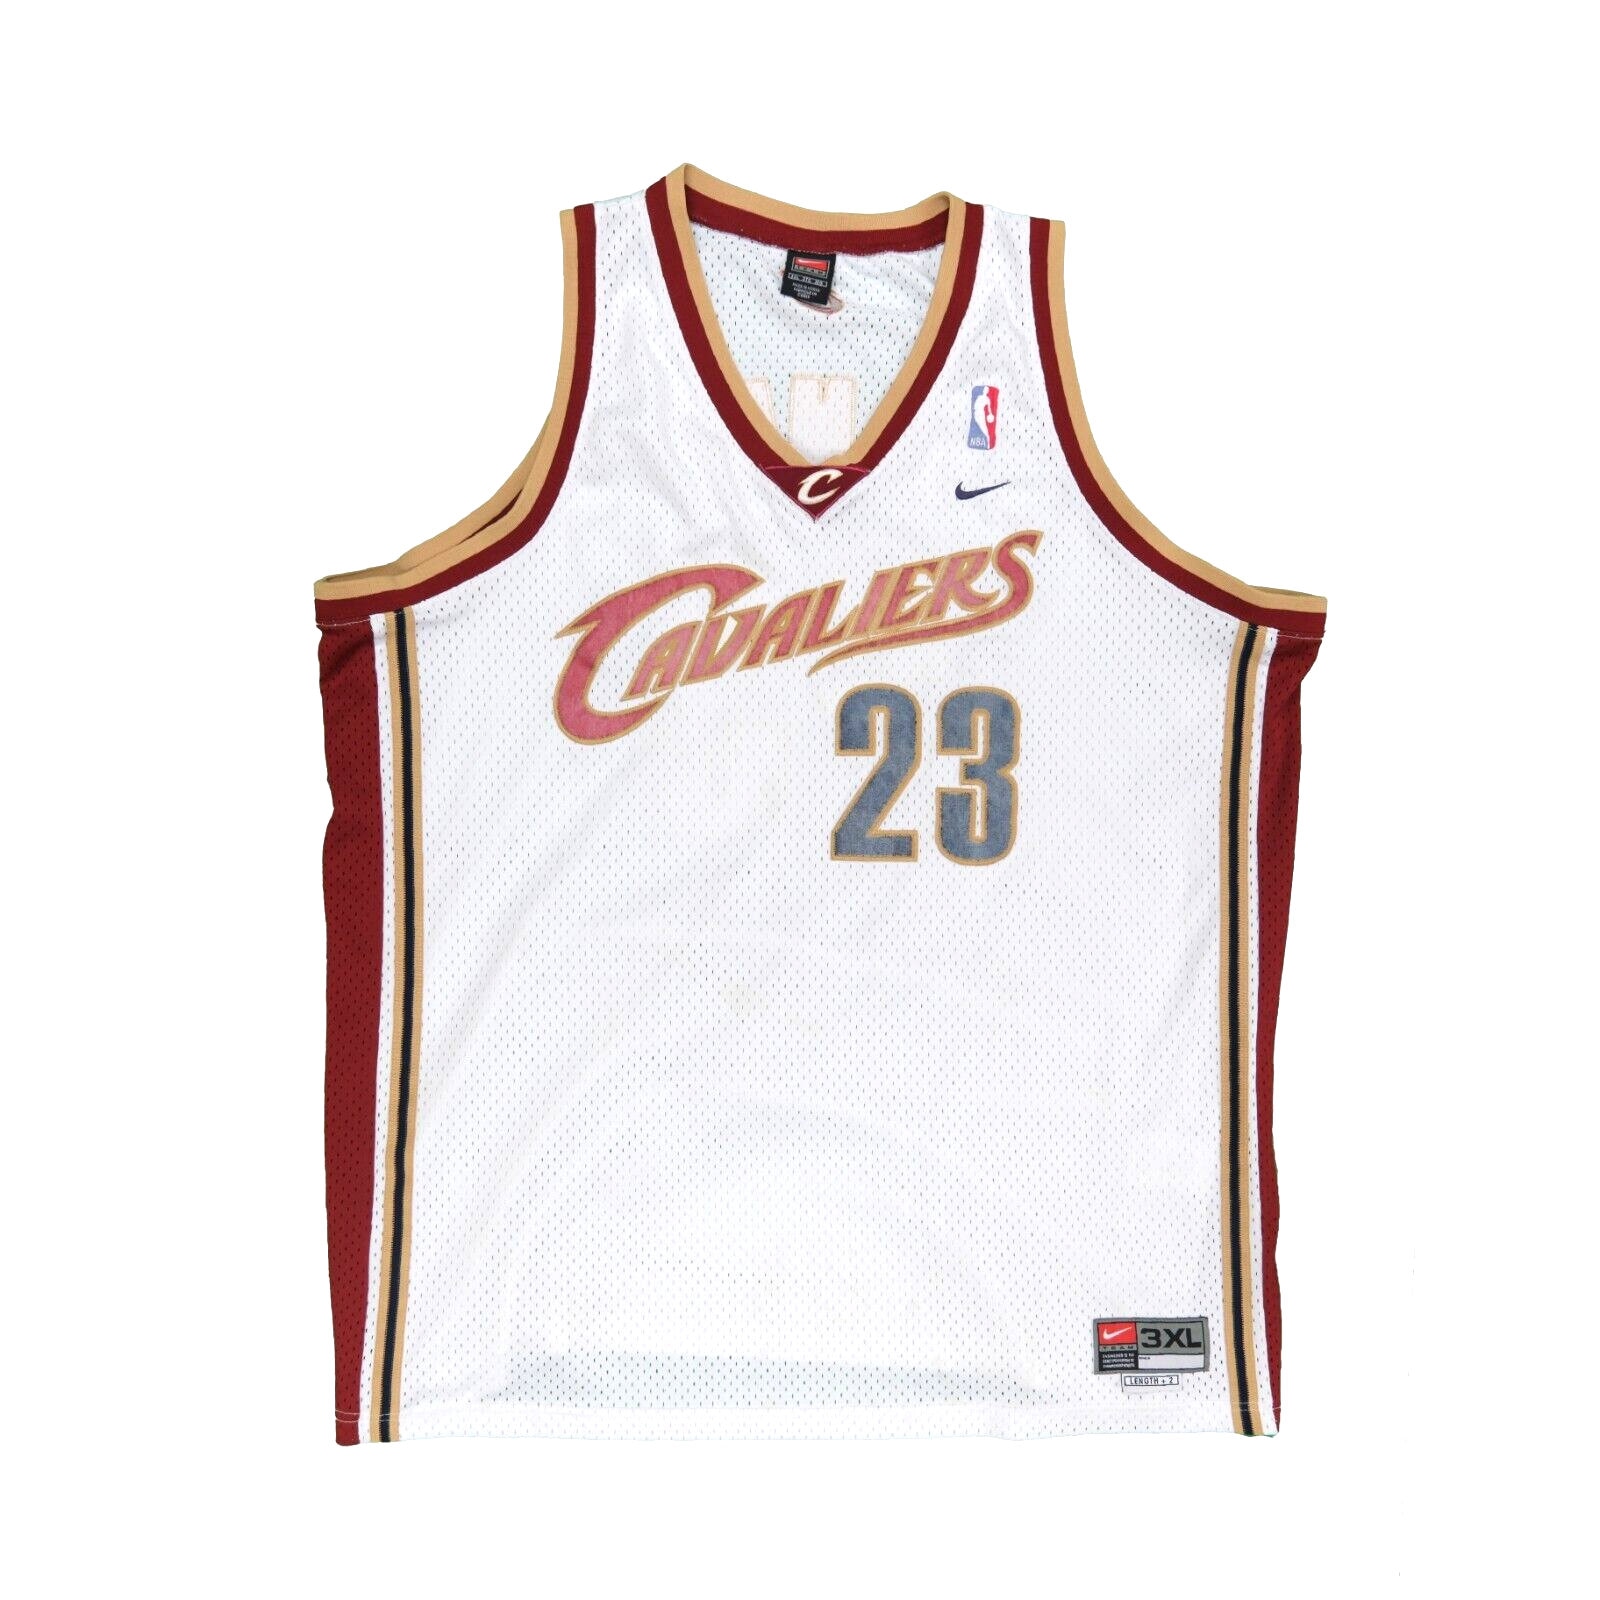 Nike LeBron James Cleveland Cavaliers Retro Rewind Jersey